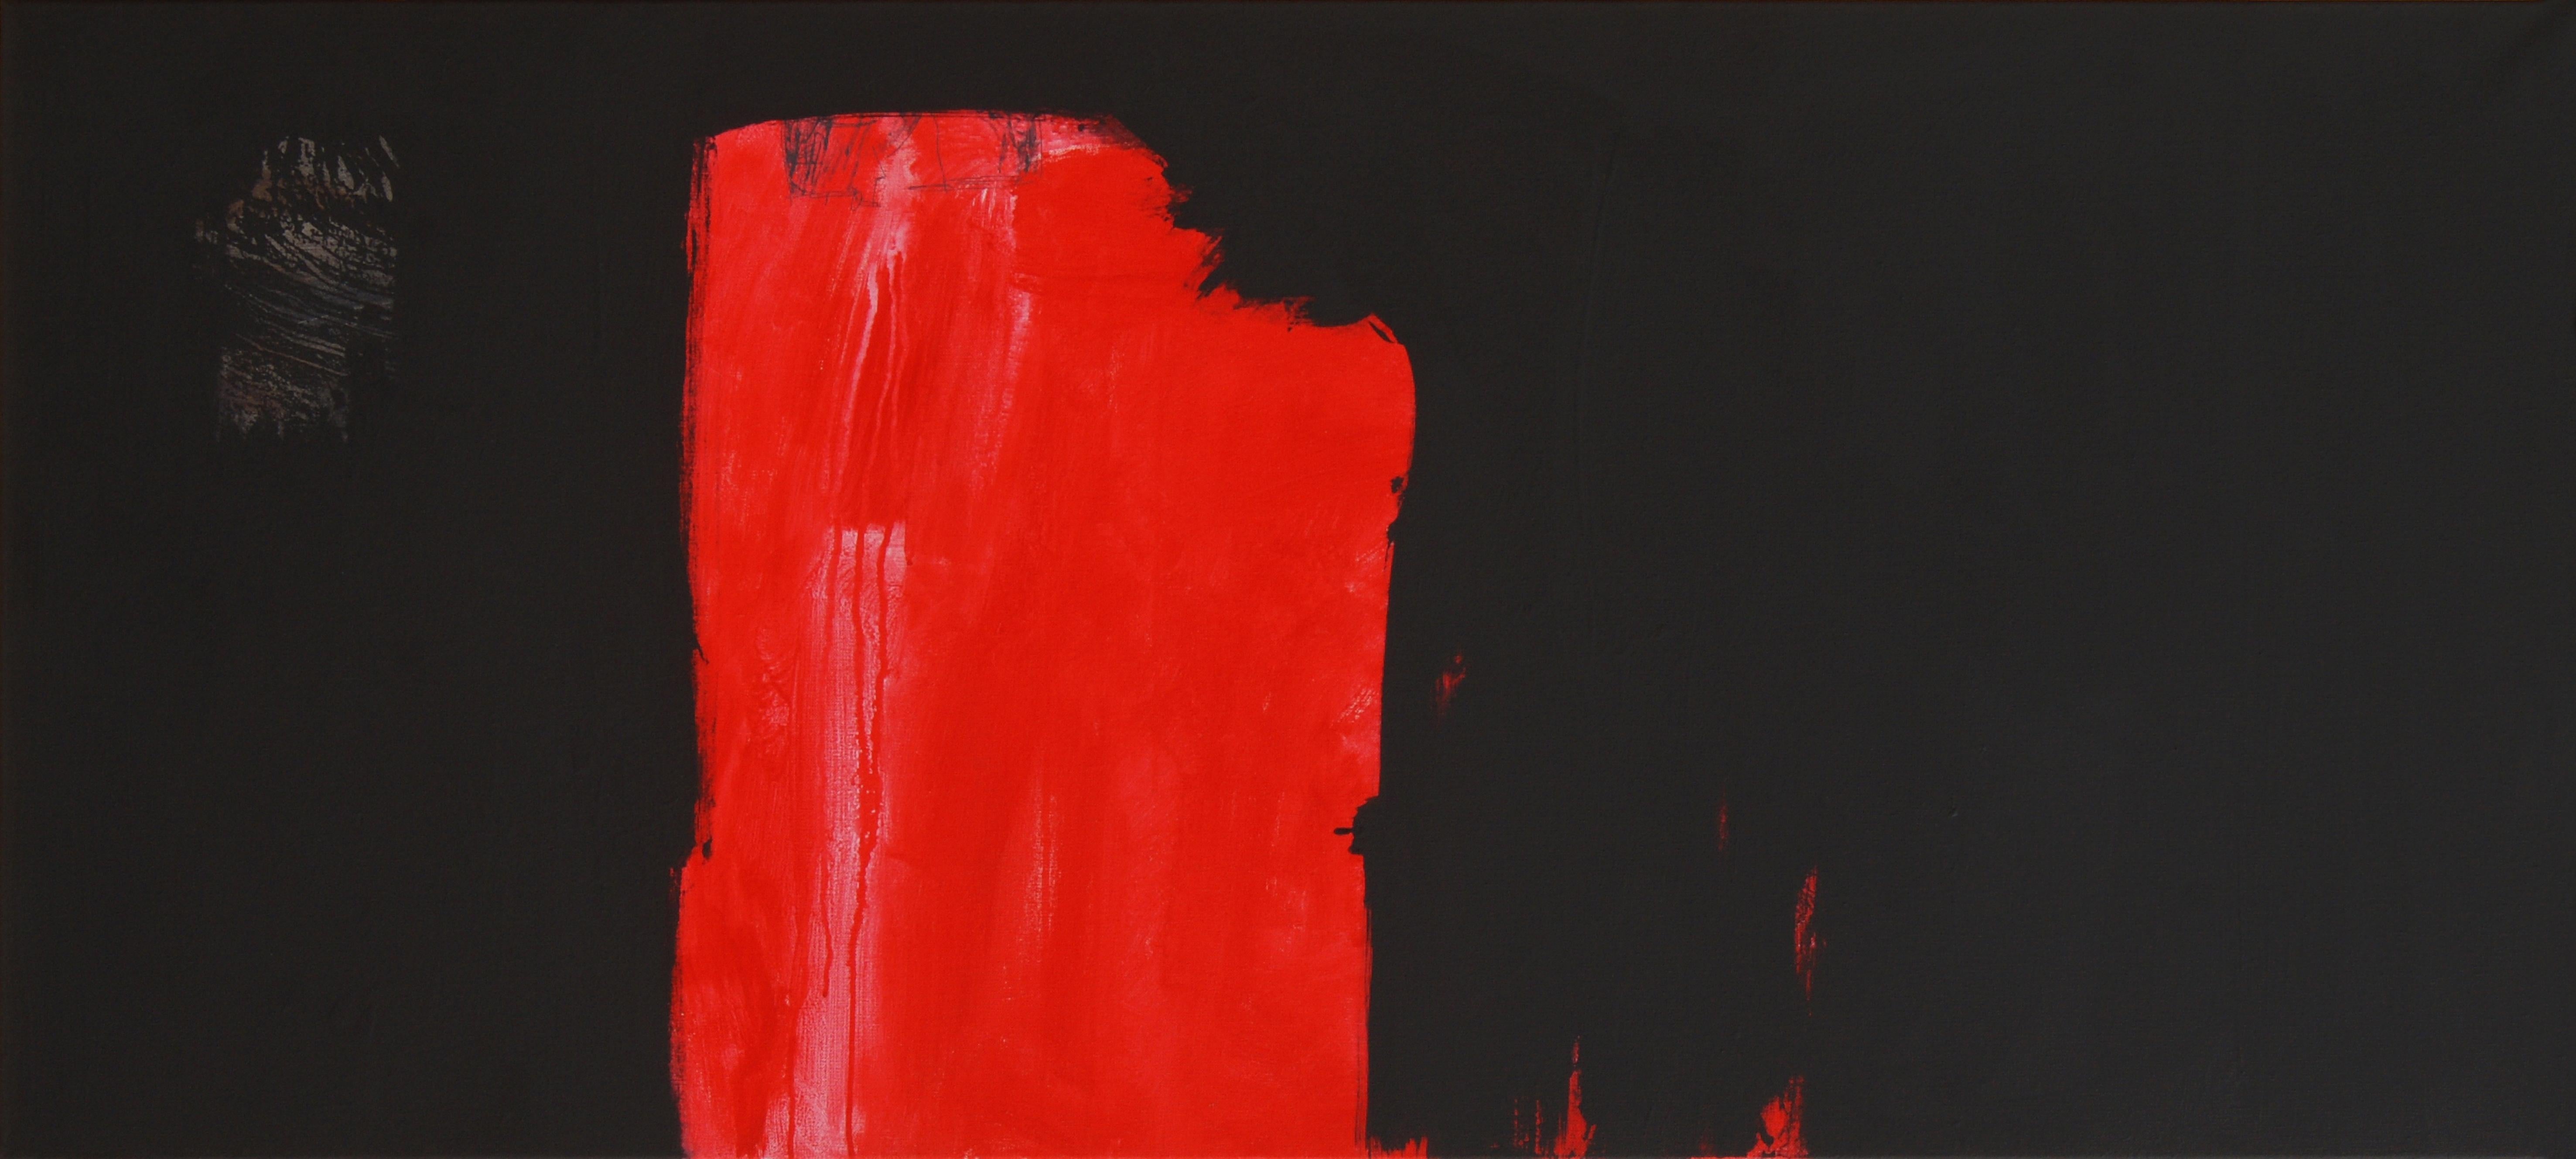 RAFAEL RUZ Abstract Painting - Ruz  Black Big  Red orignal  abstract canvas acrylic painting